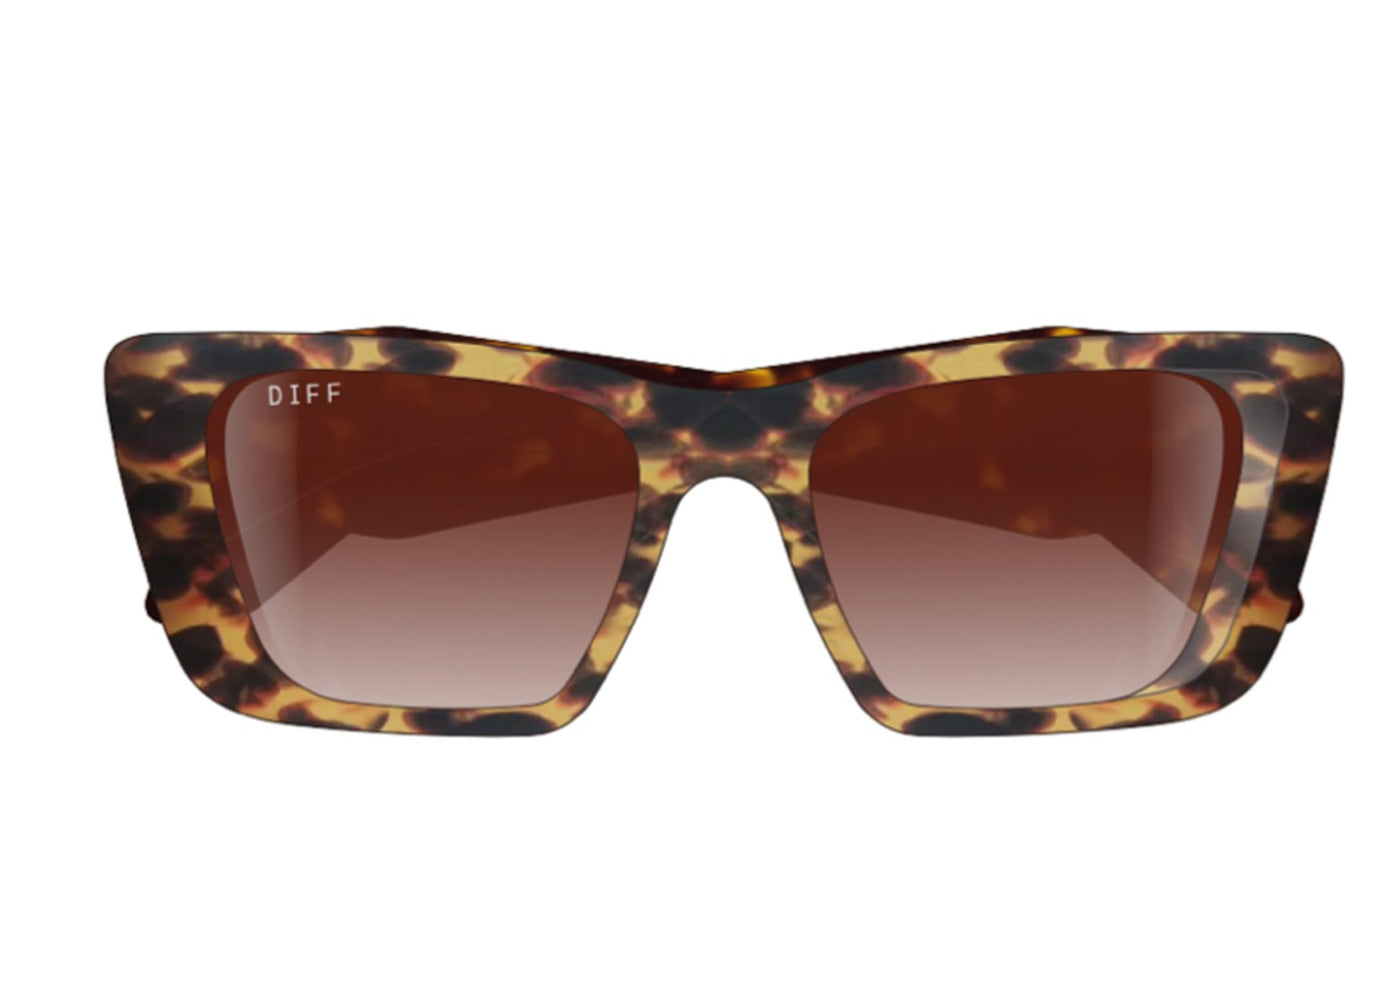 Aura Sunglasses - Tortoise and Brown Gradient - Sunglasses - JMP The Label